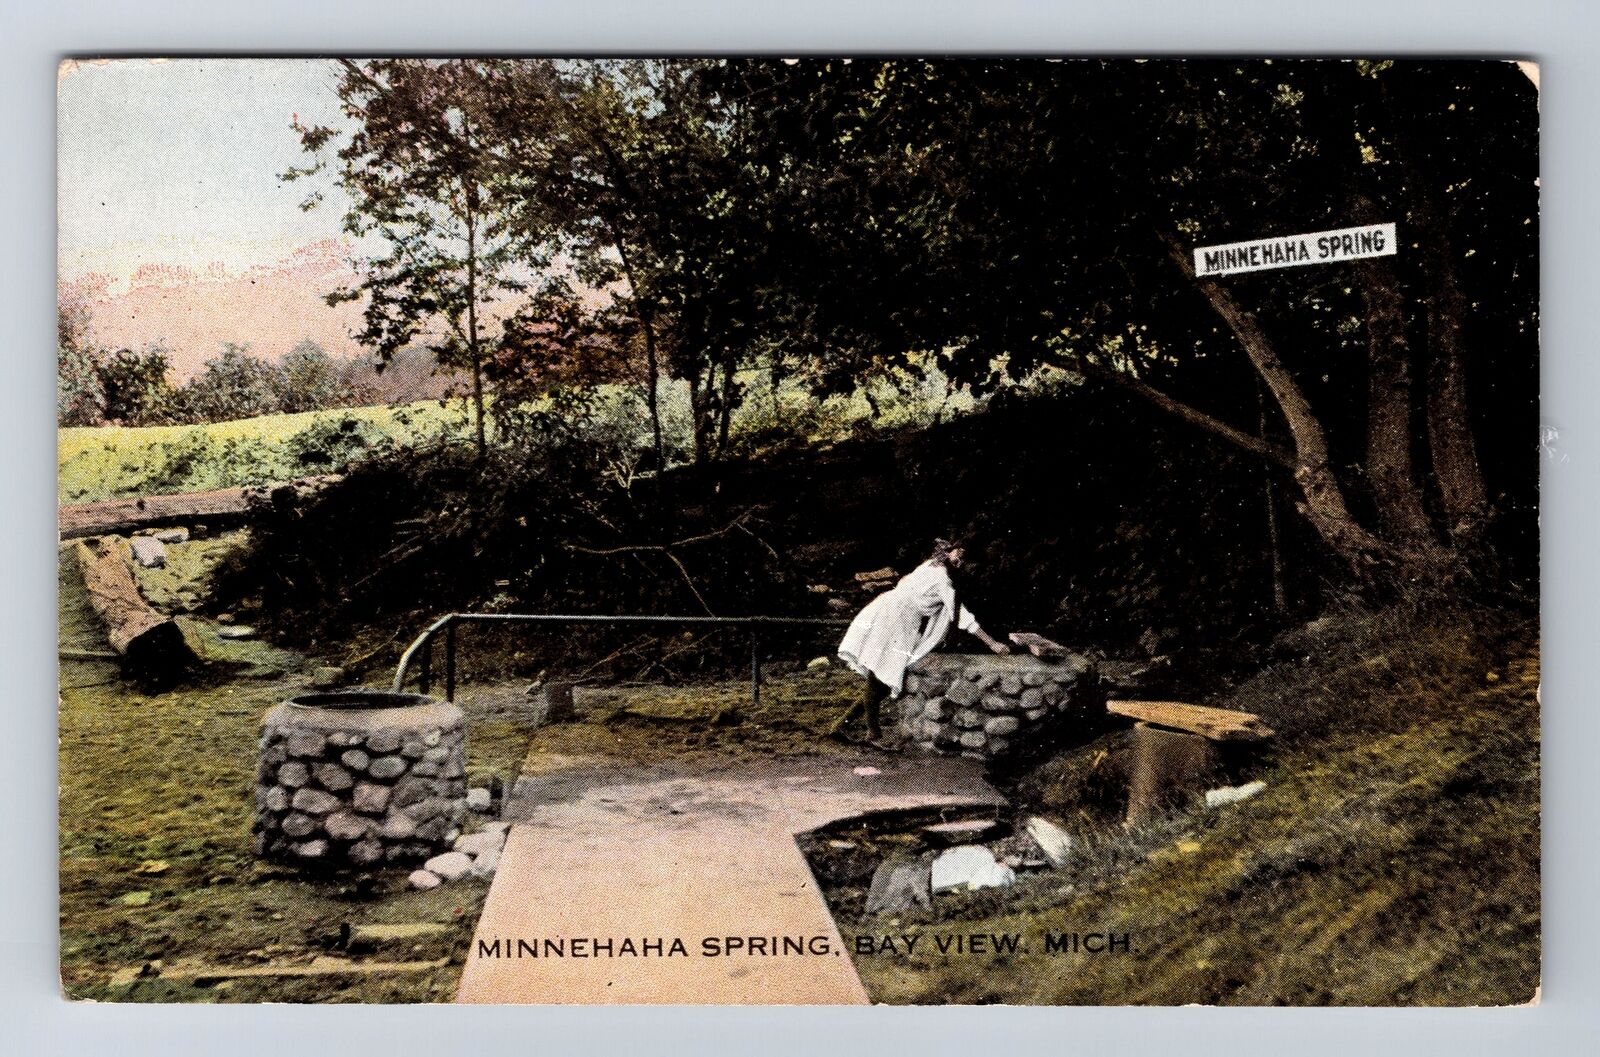 Bay View MI-Michigan, Minnehaha Spring Antique, Souvenir Vintage Postcard